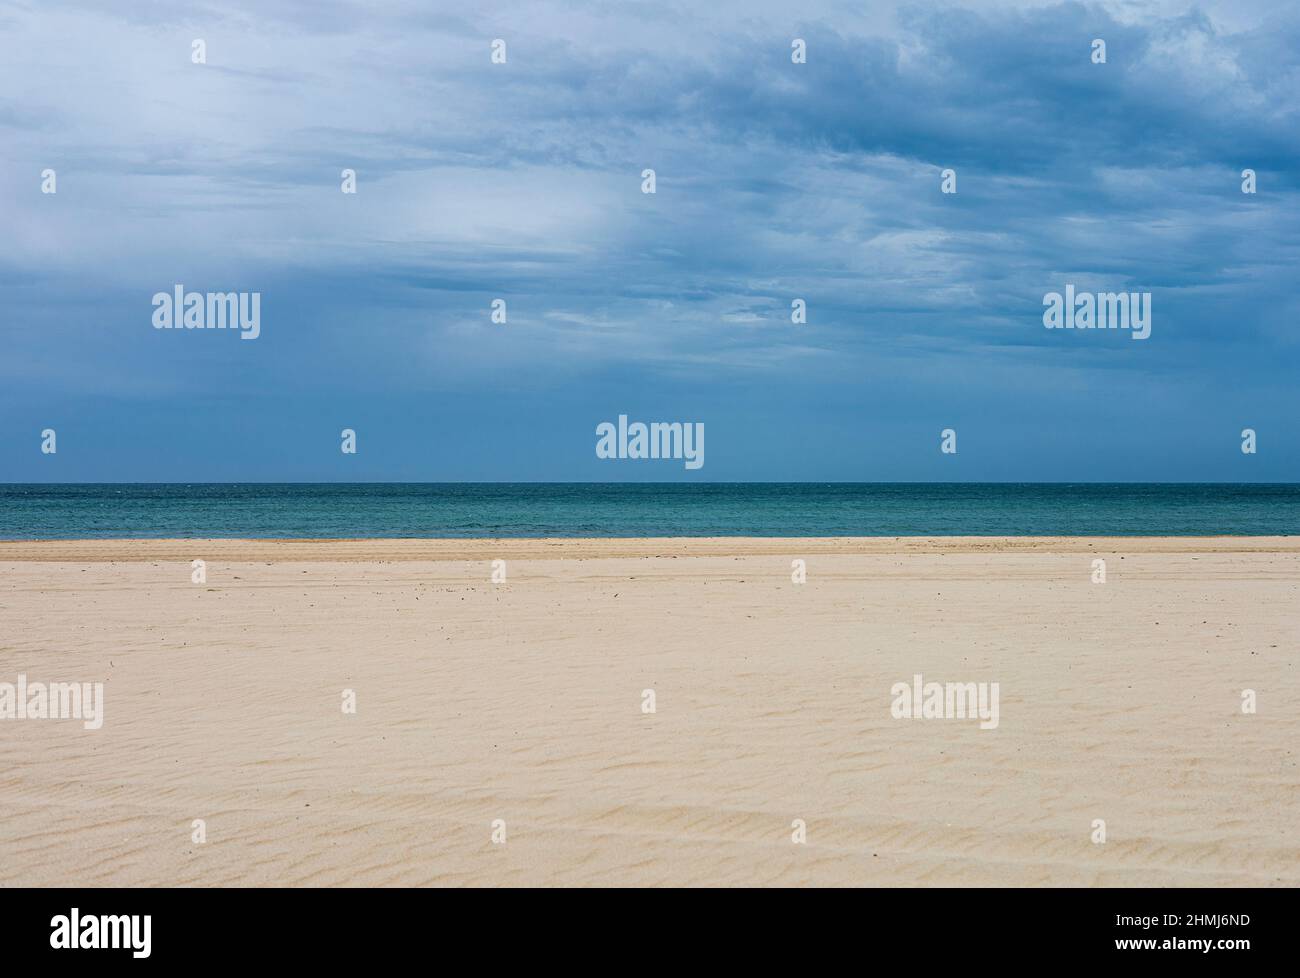 Sabbia, mare e cielo a Cadice, Spagna. Foto Stock